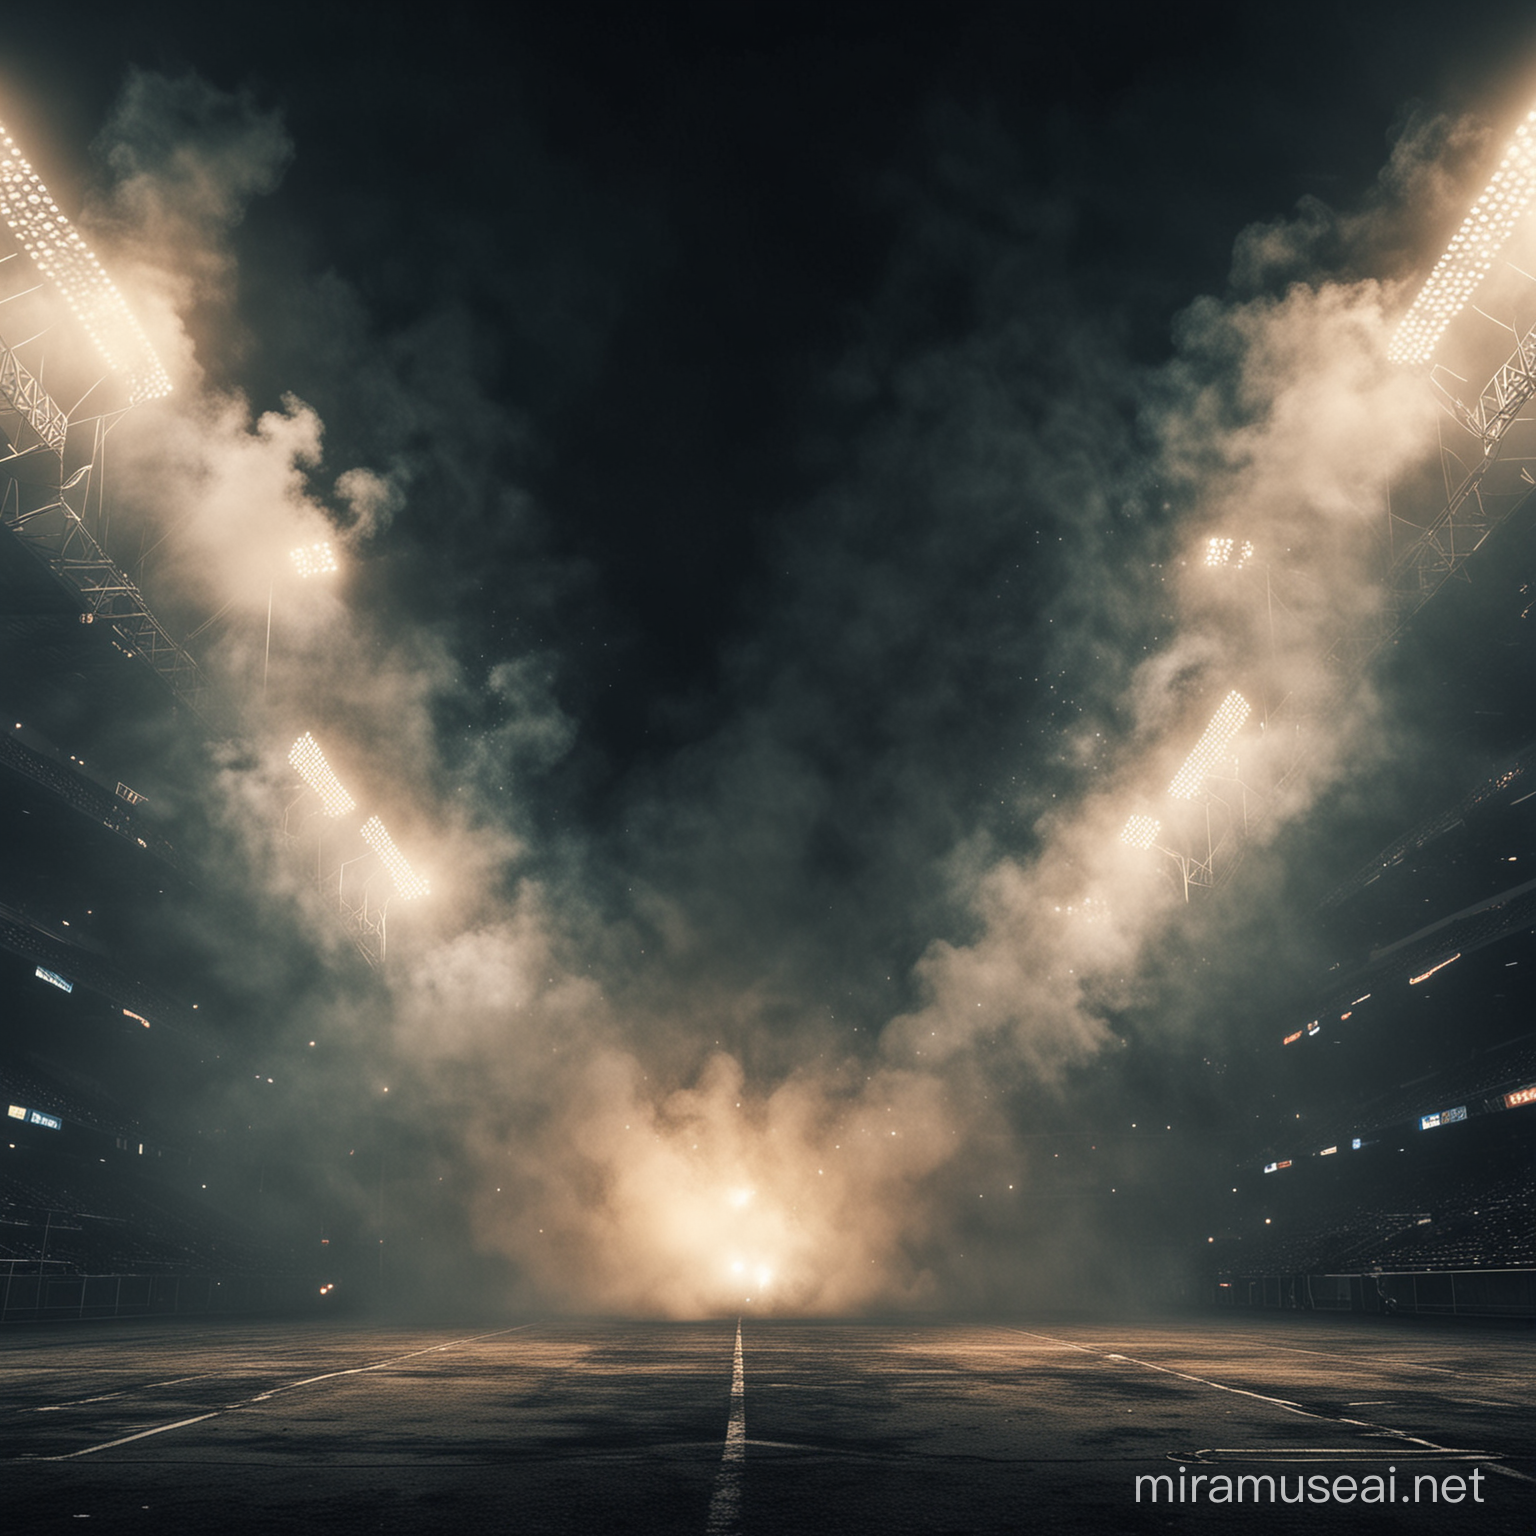 smoky bad ass background, dark with stadium lights and with smoke